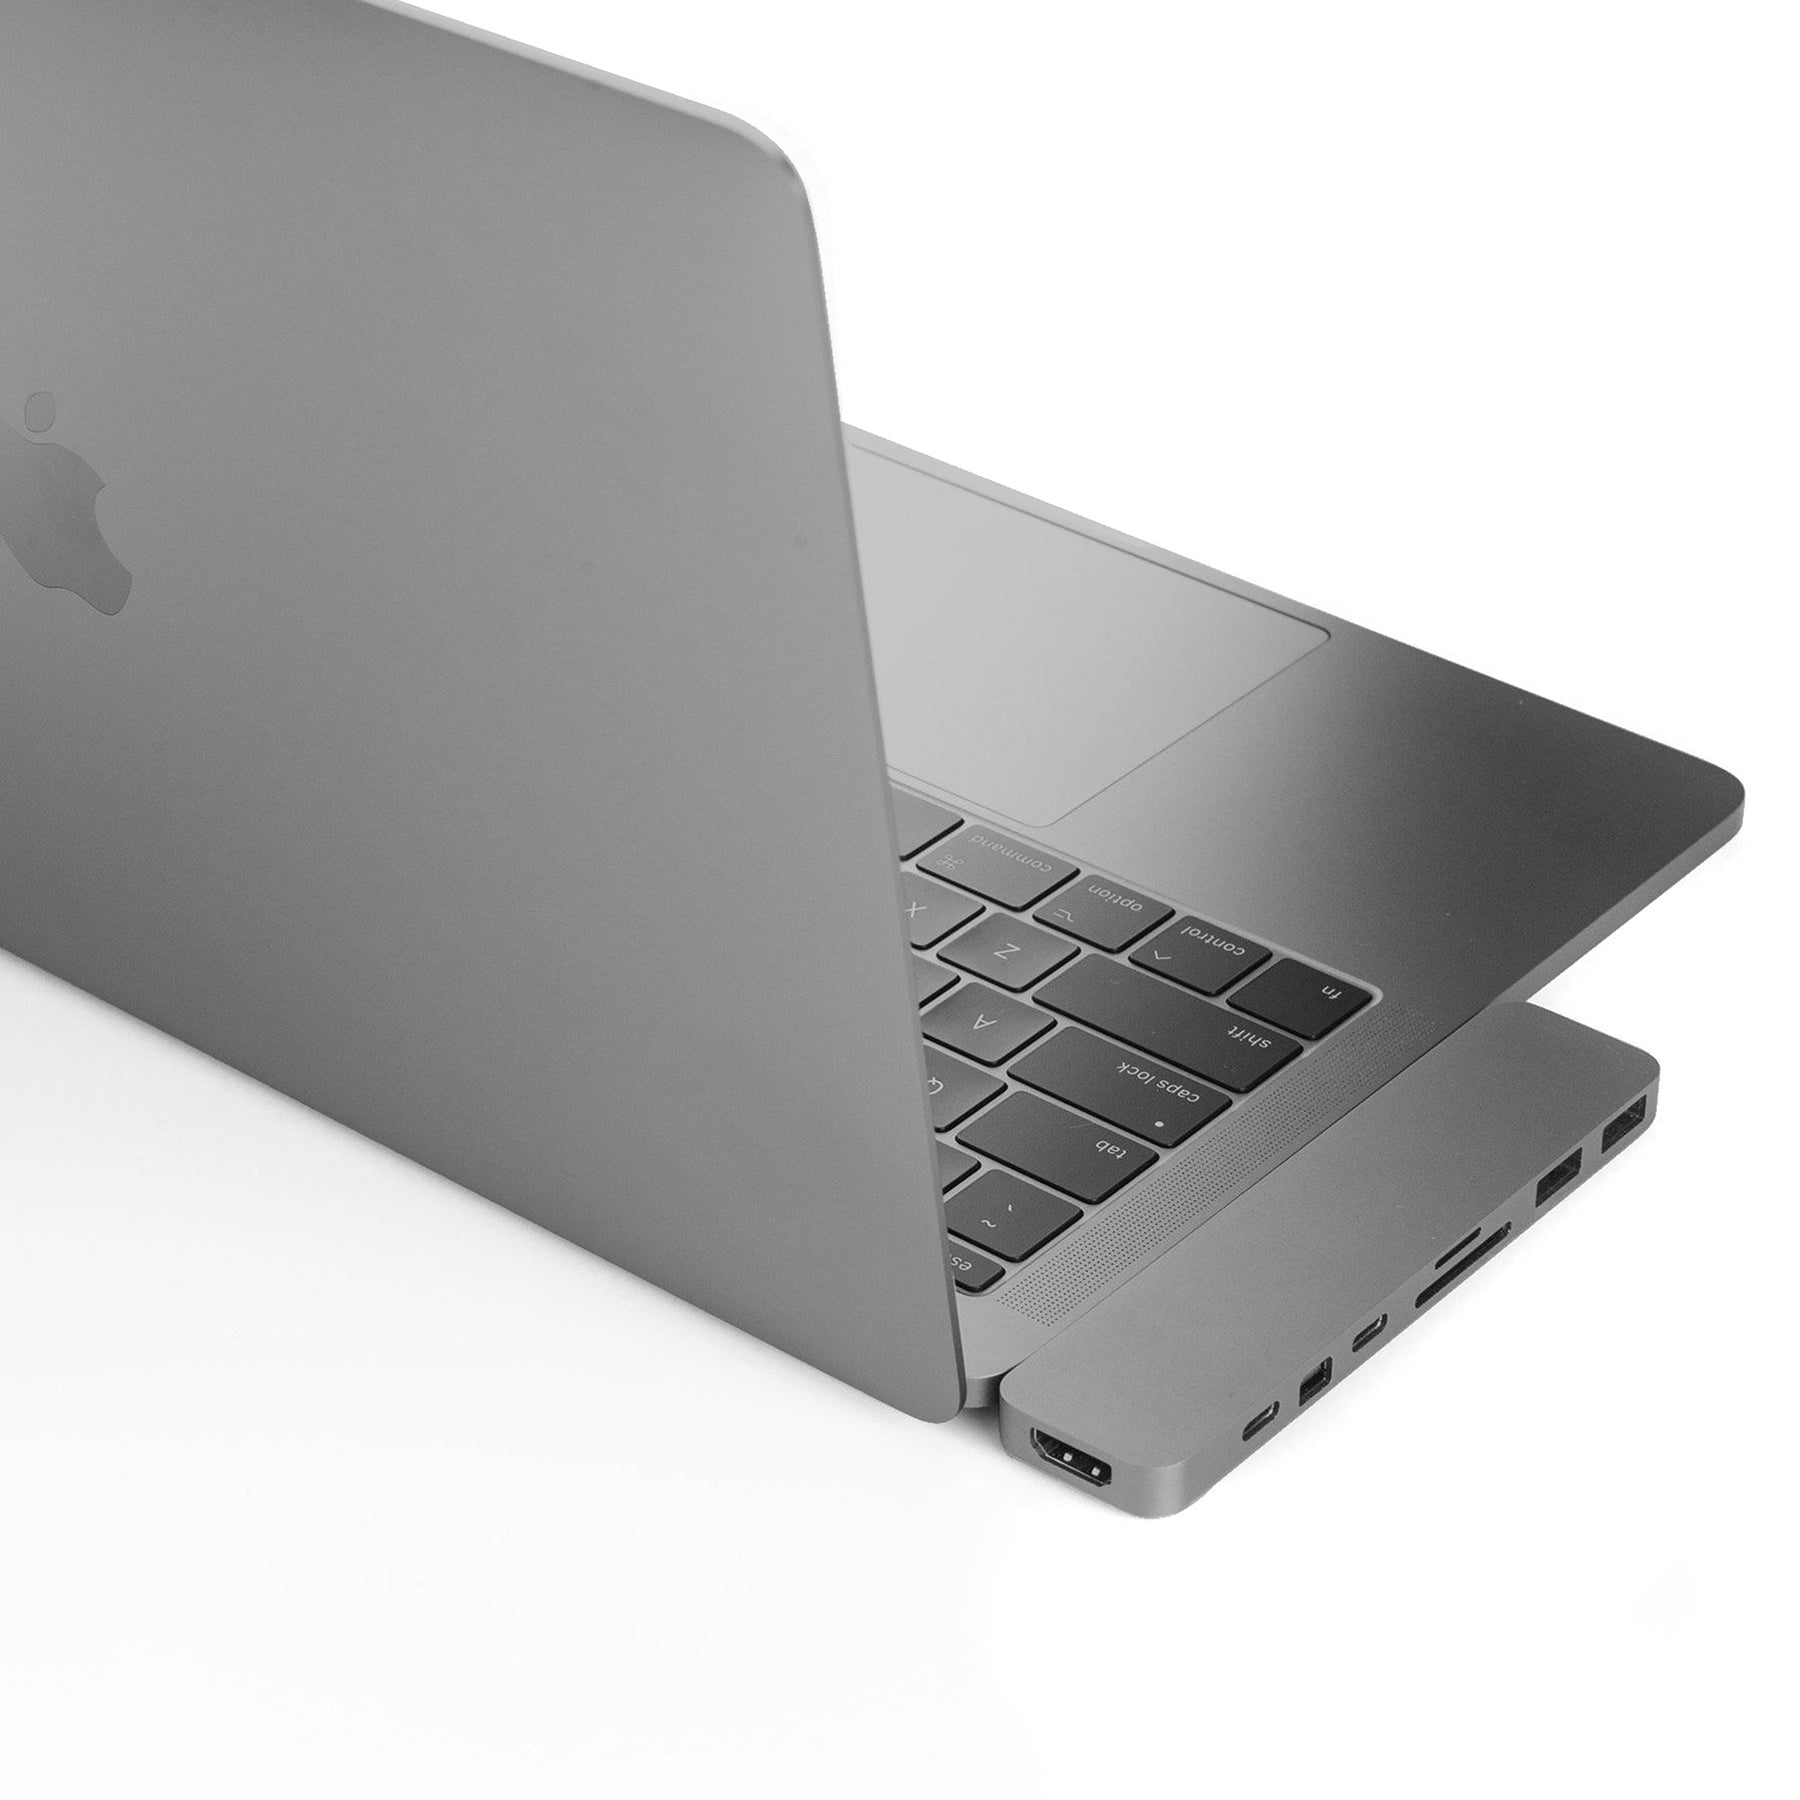 8-in-2 USB-C Hub for MacBook Pro/Air Thunderbolt 3 | HyperDrive HyperShop.com